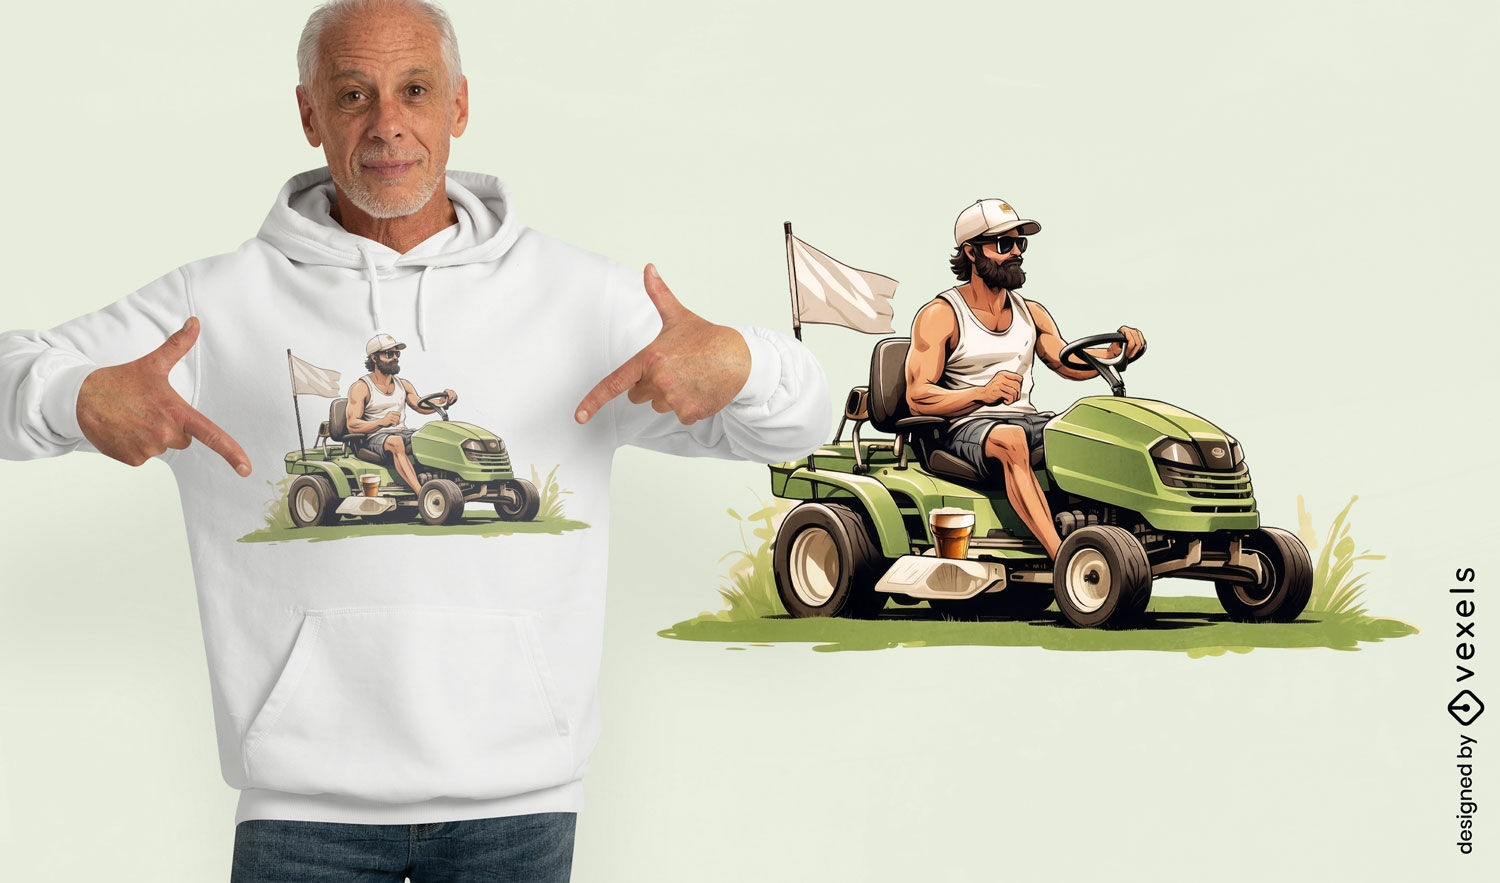 Lawn mowing man t-shirt design